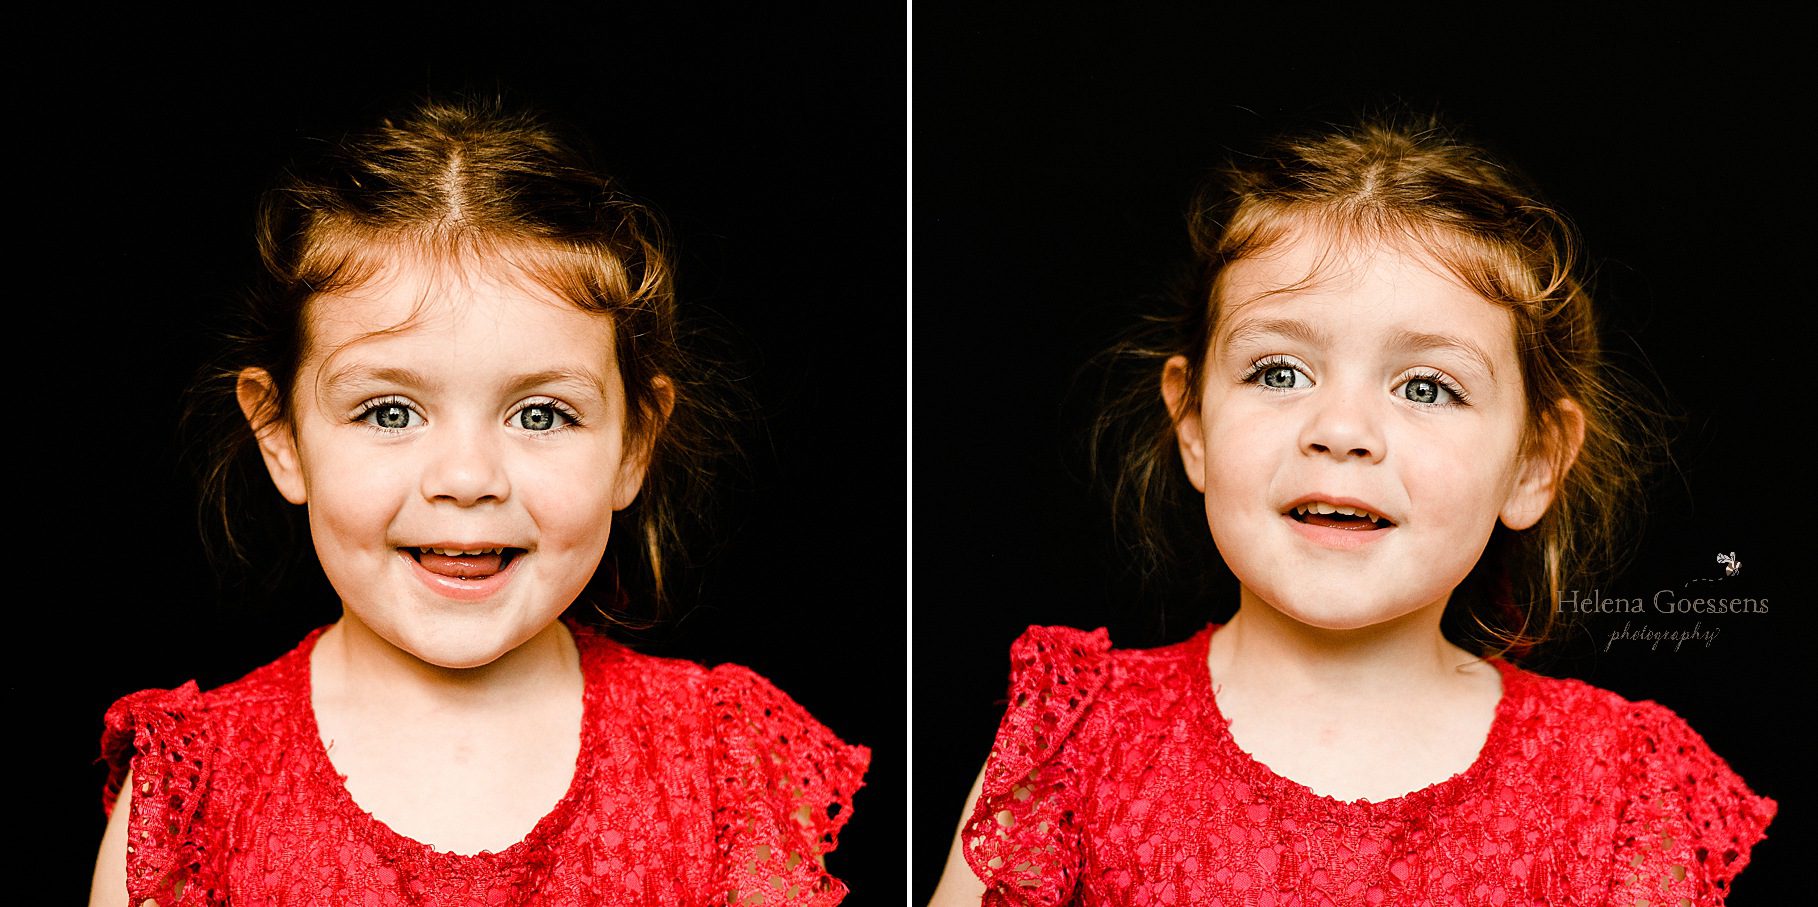 Helena Goessens Photography photographs fine art preschool portraits